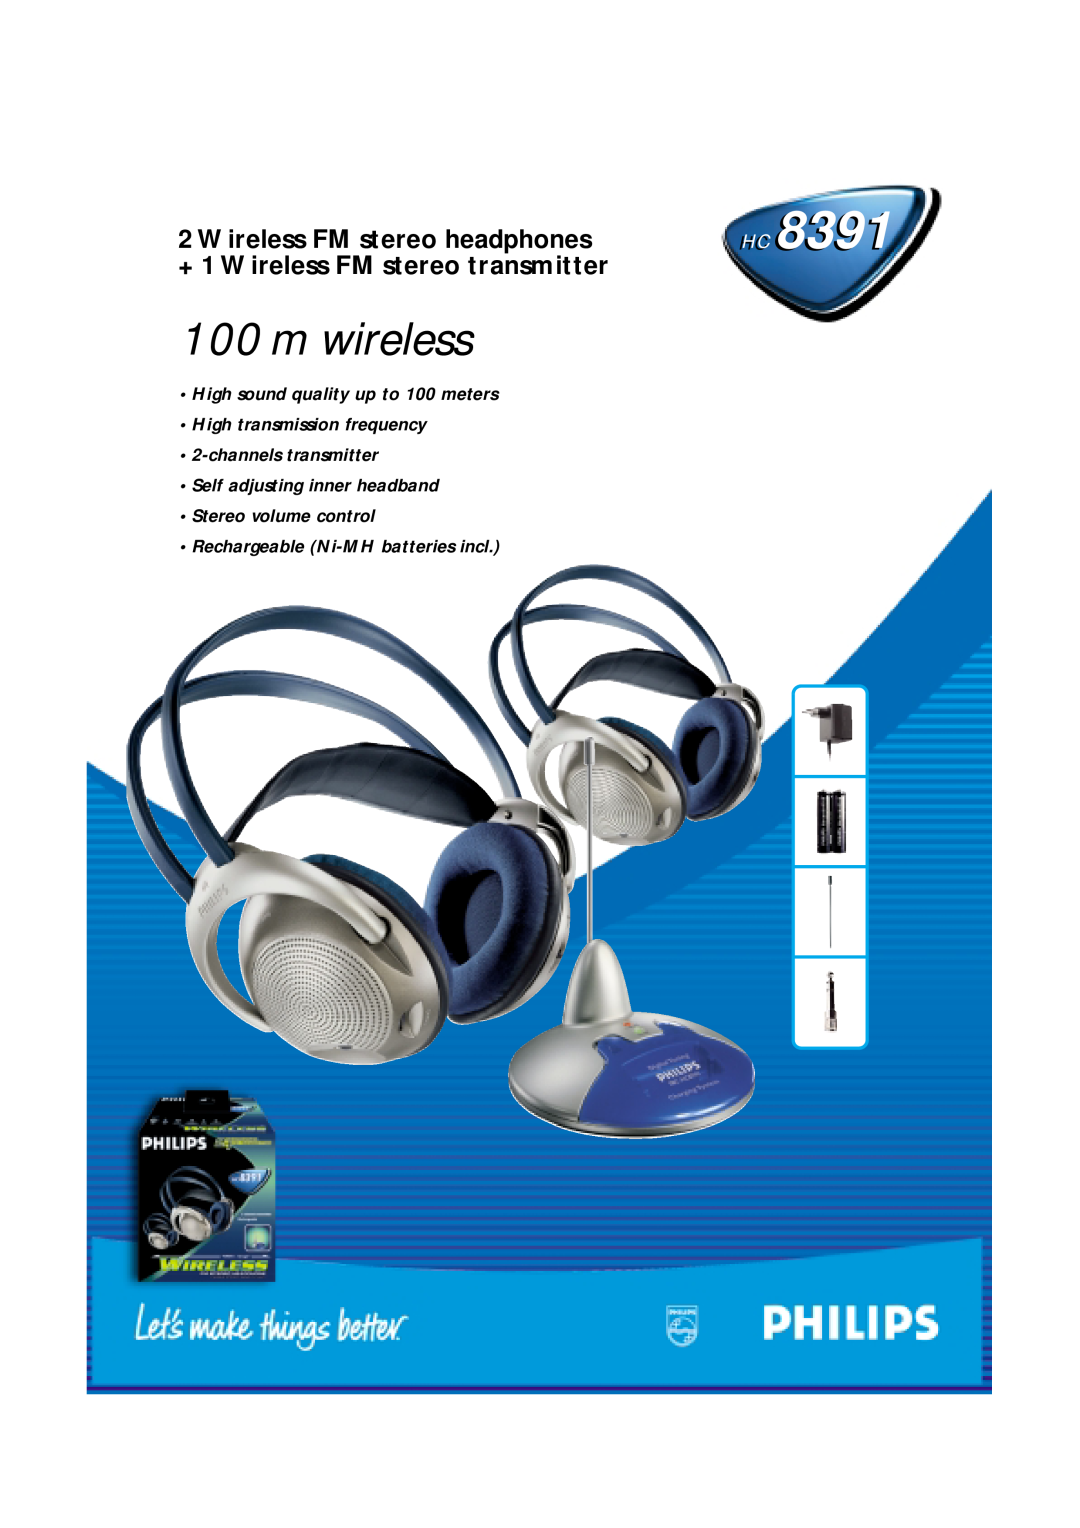 Philips HC 8391 manual Wireless FM stereo headphones, + 1 Wireless FM stereo transmitter, m wireless, channelstransmitter 